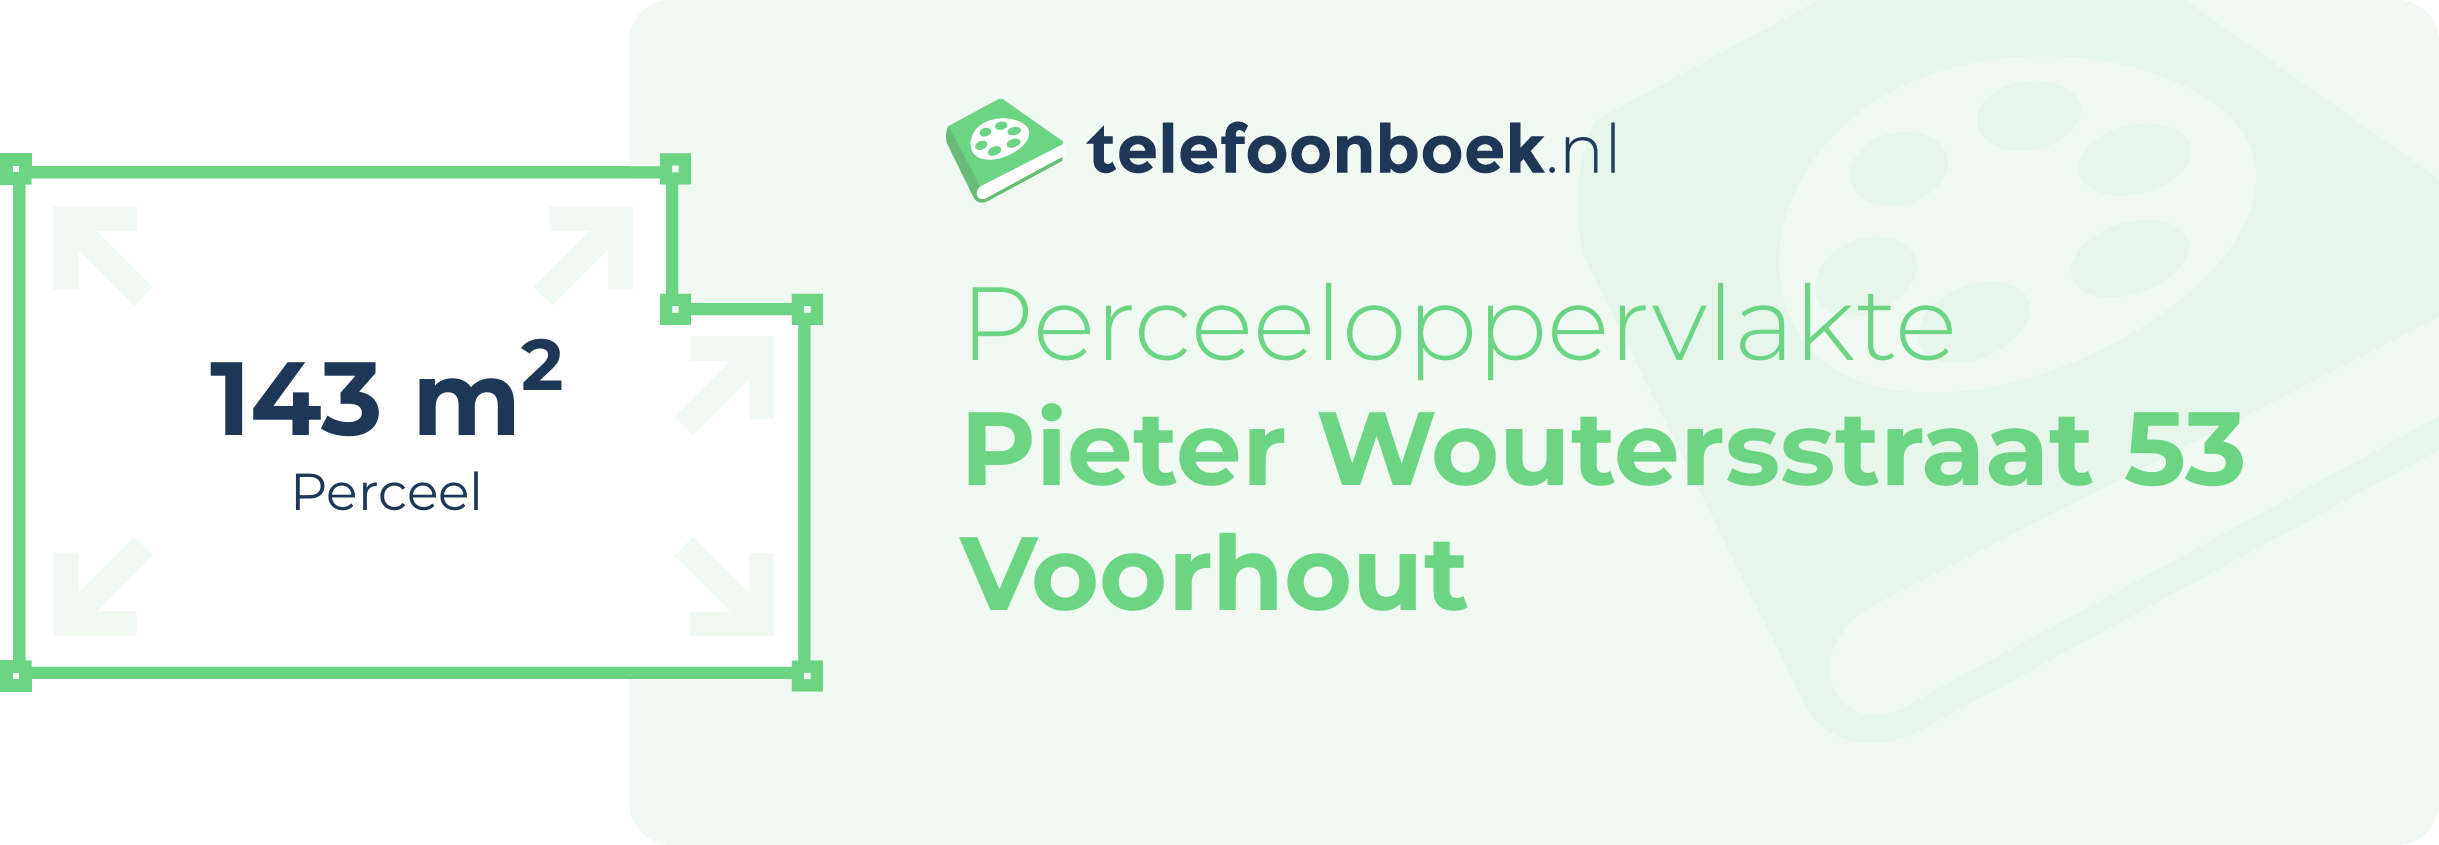 Perceeloppervlakte Pieter Woutersstraat 53 Voorhout